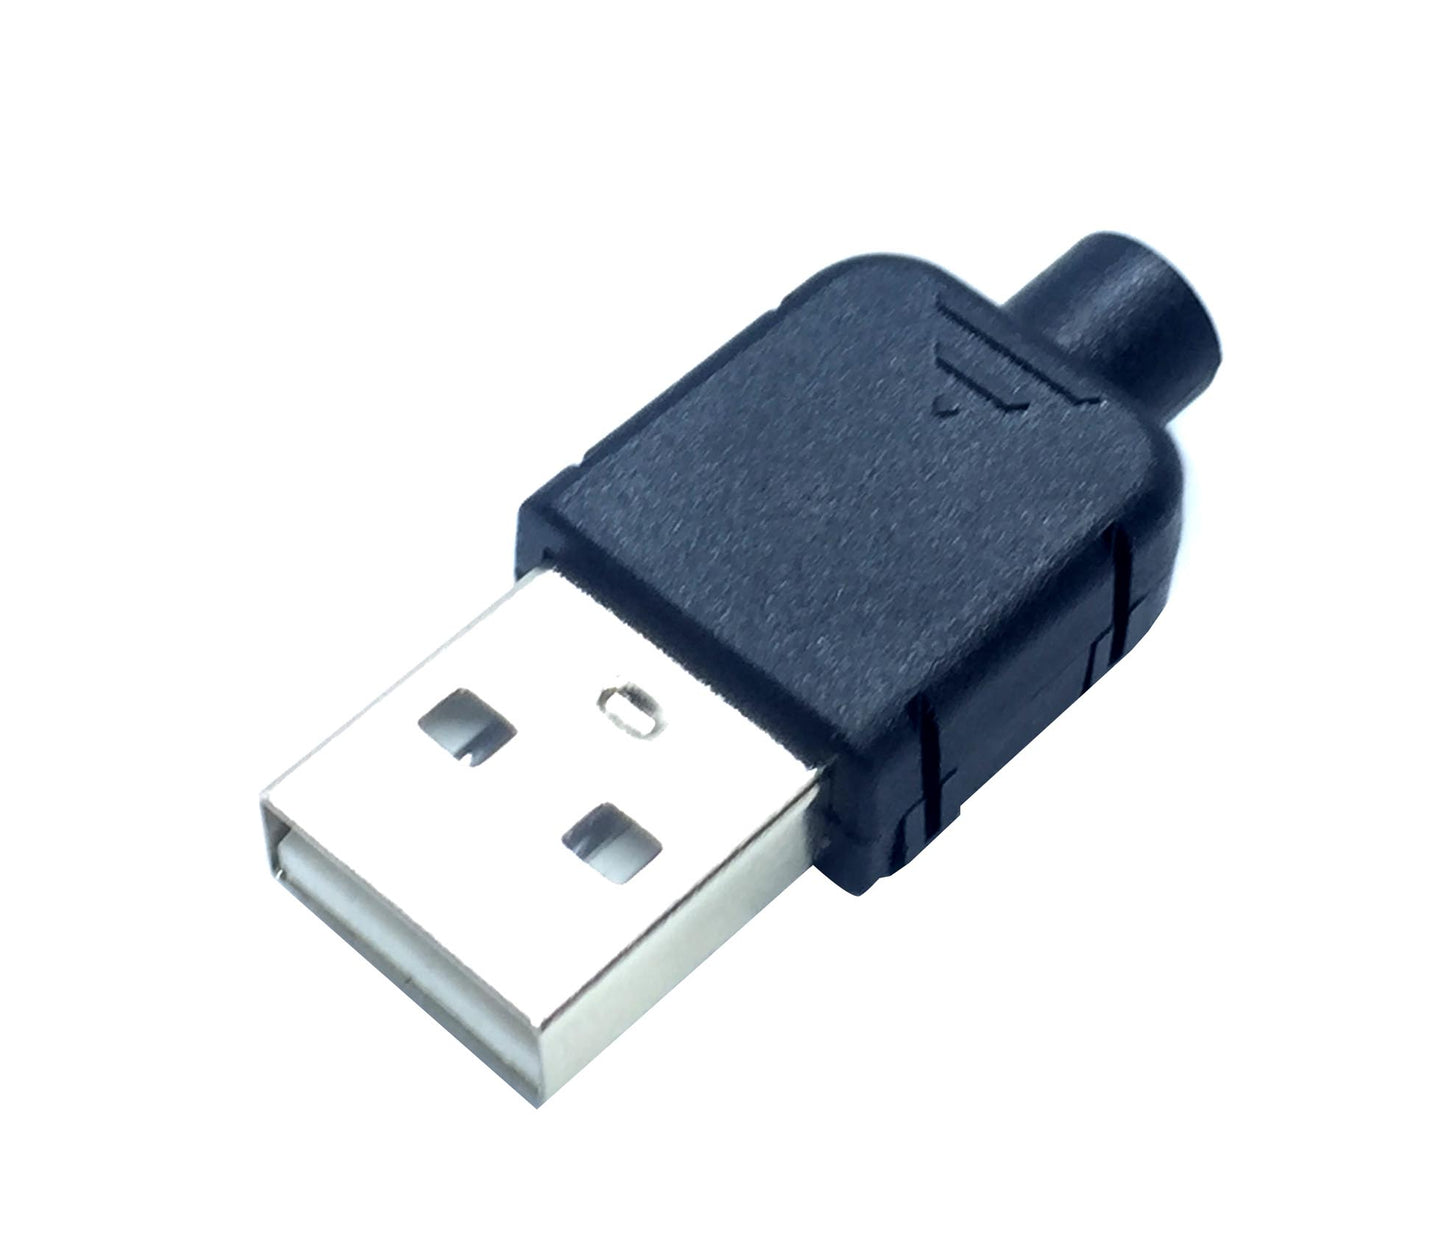 USB DIY Connector Shell Type A Male Plug